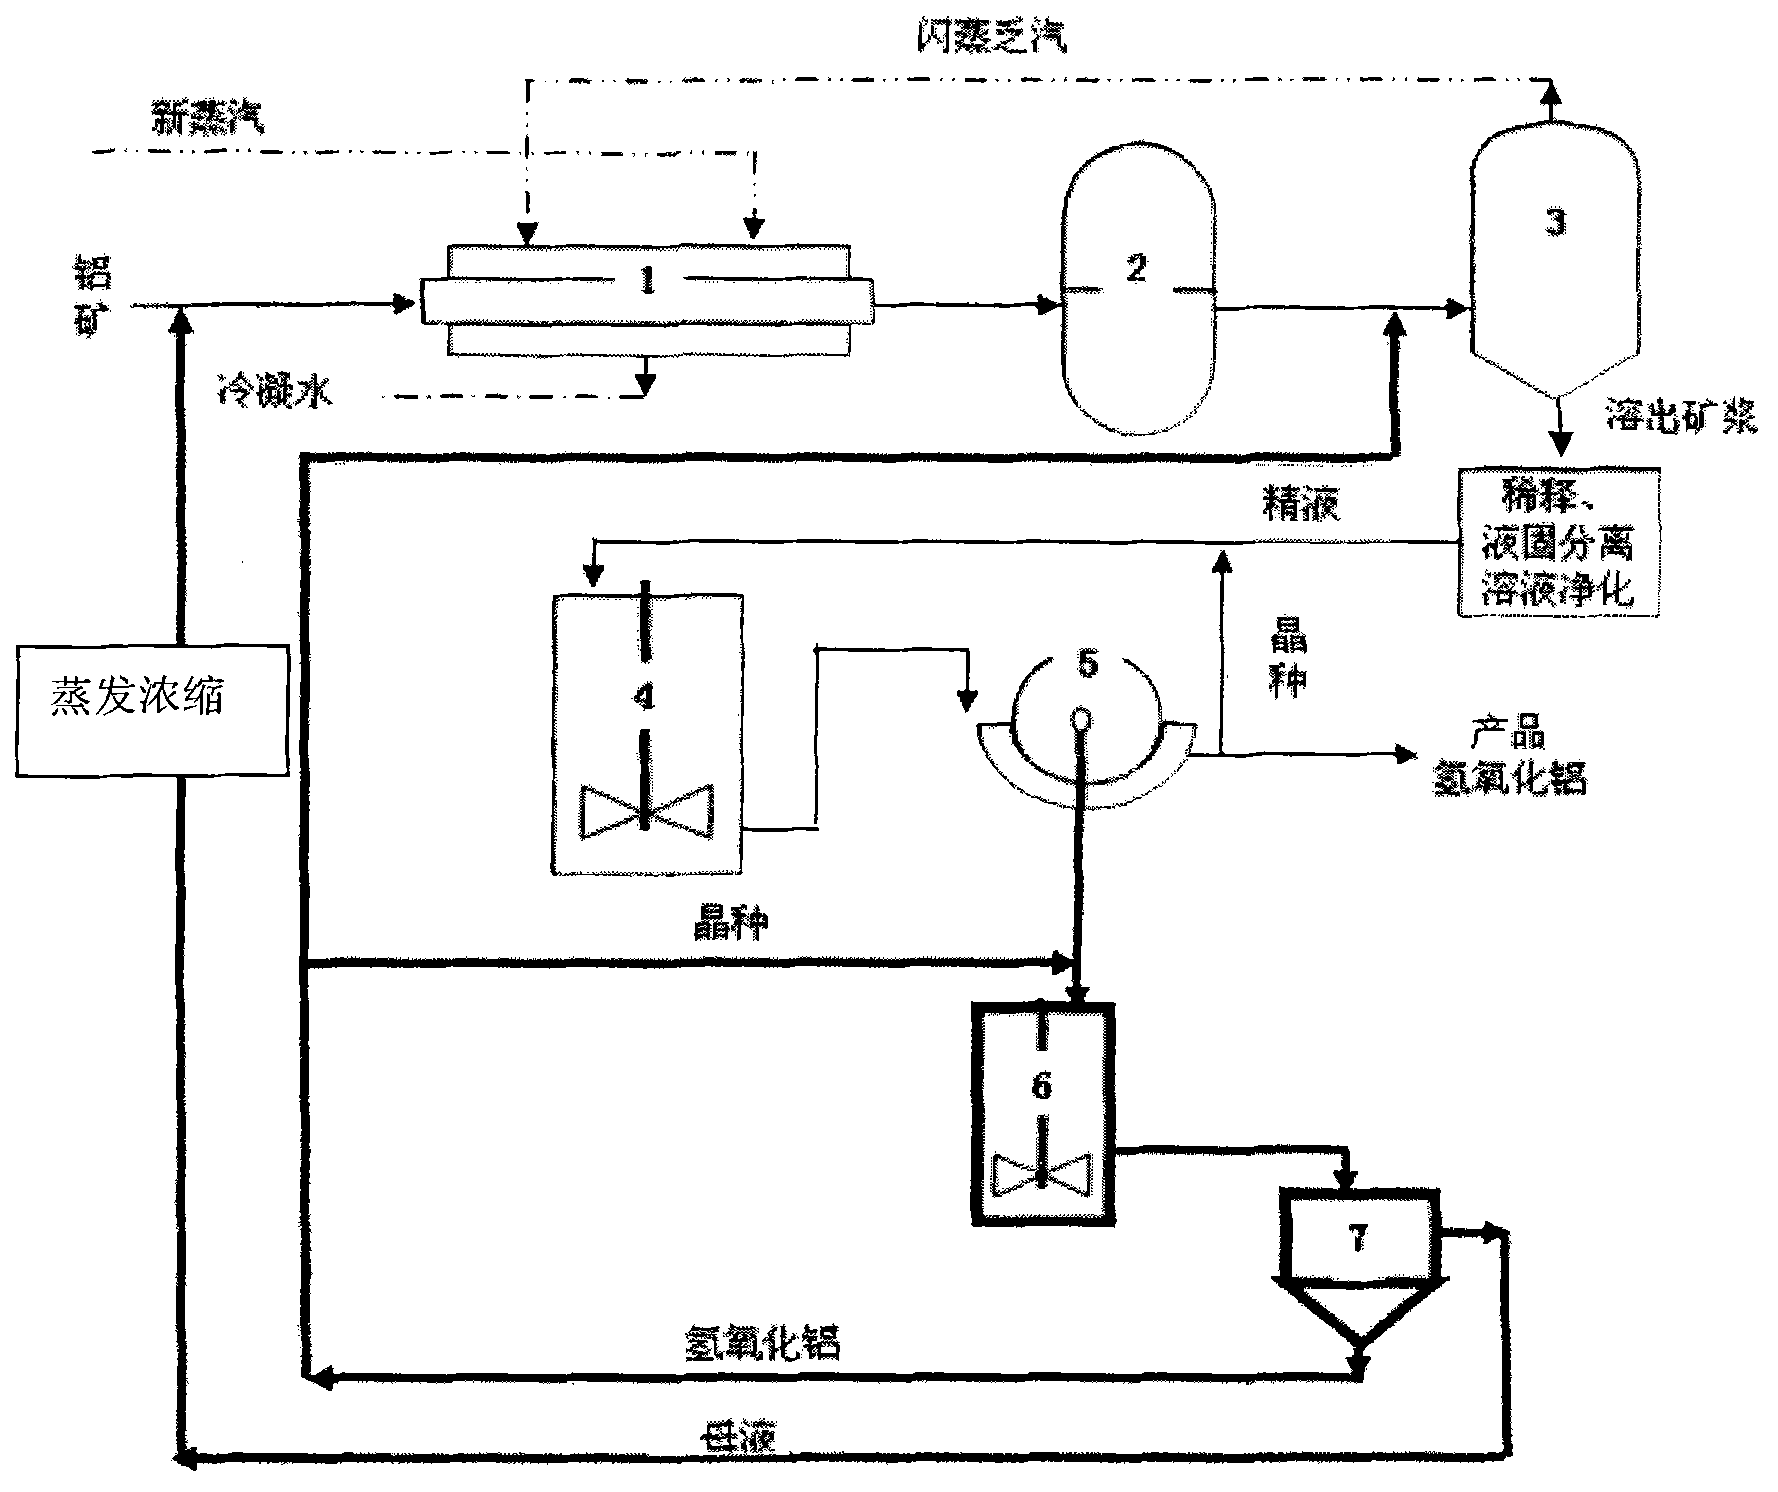 Method for processing diaspore ore to produce alumina